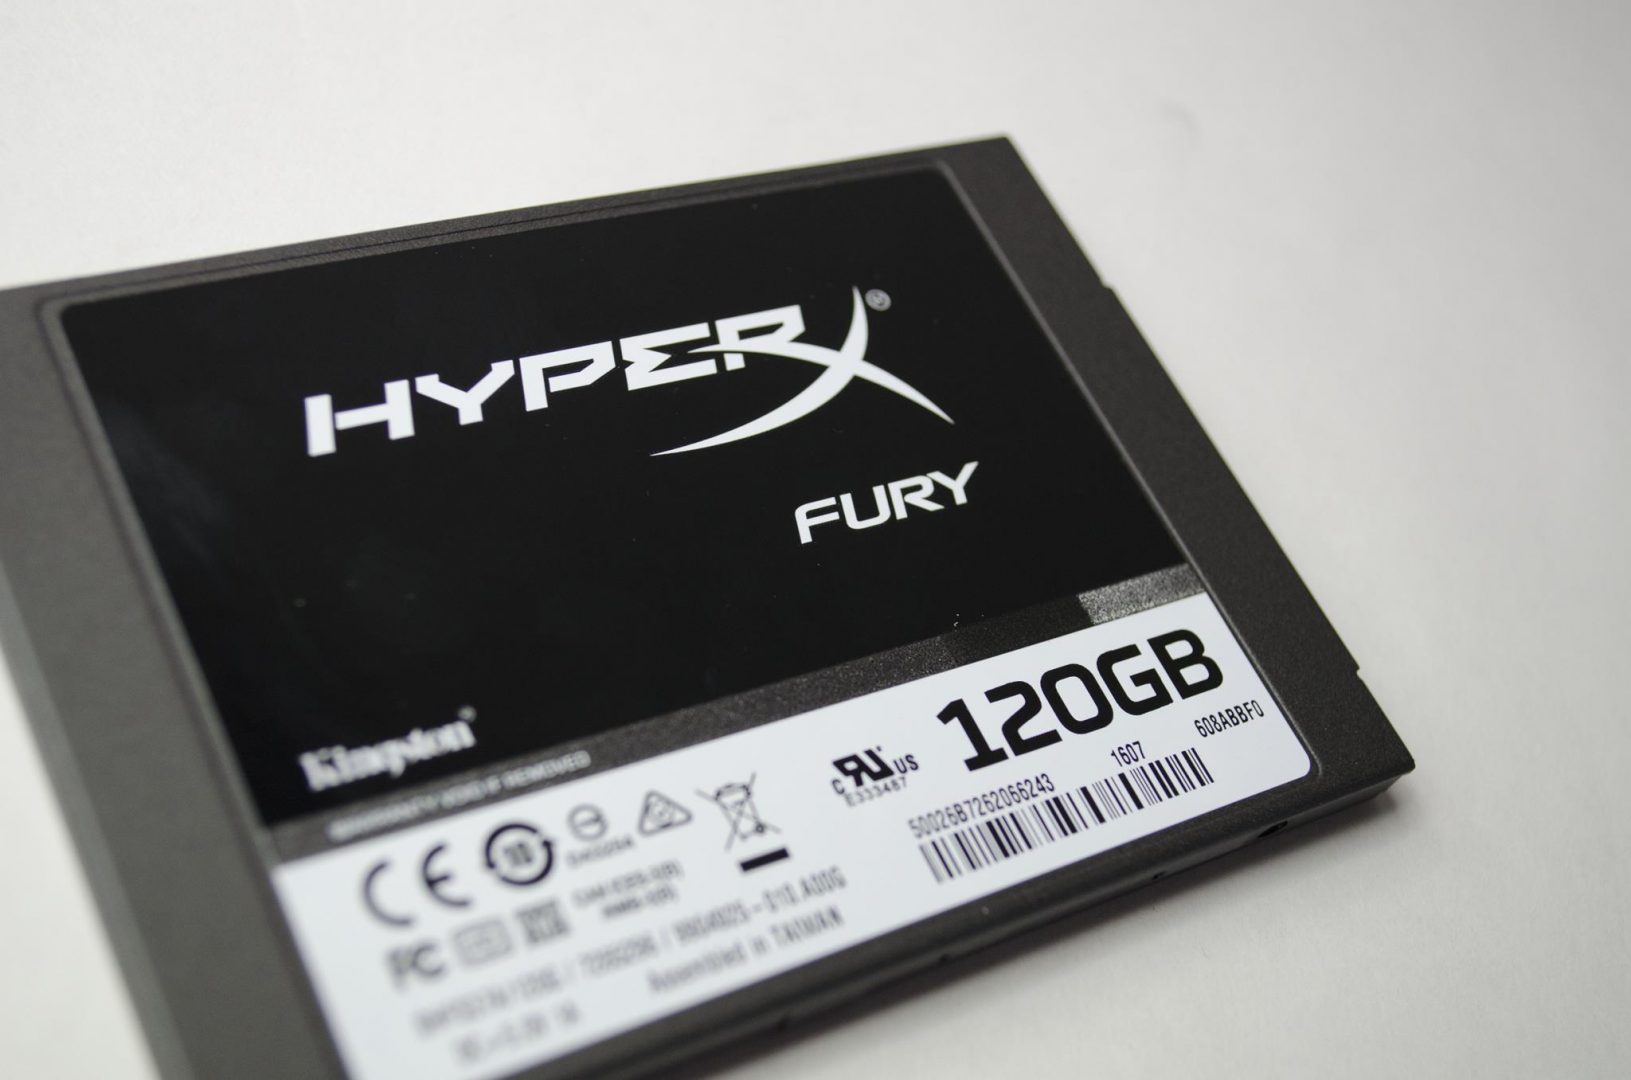 HyperX Fury 120GB SSD Review With Raid Tests